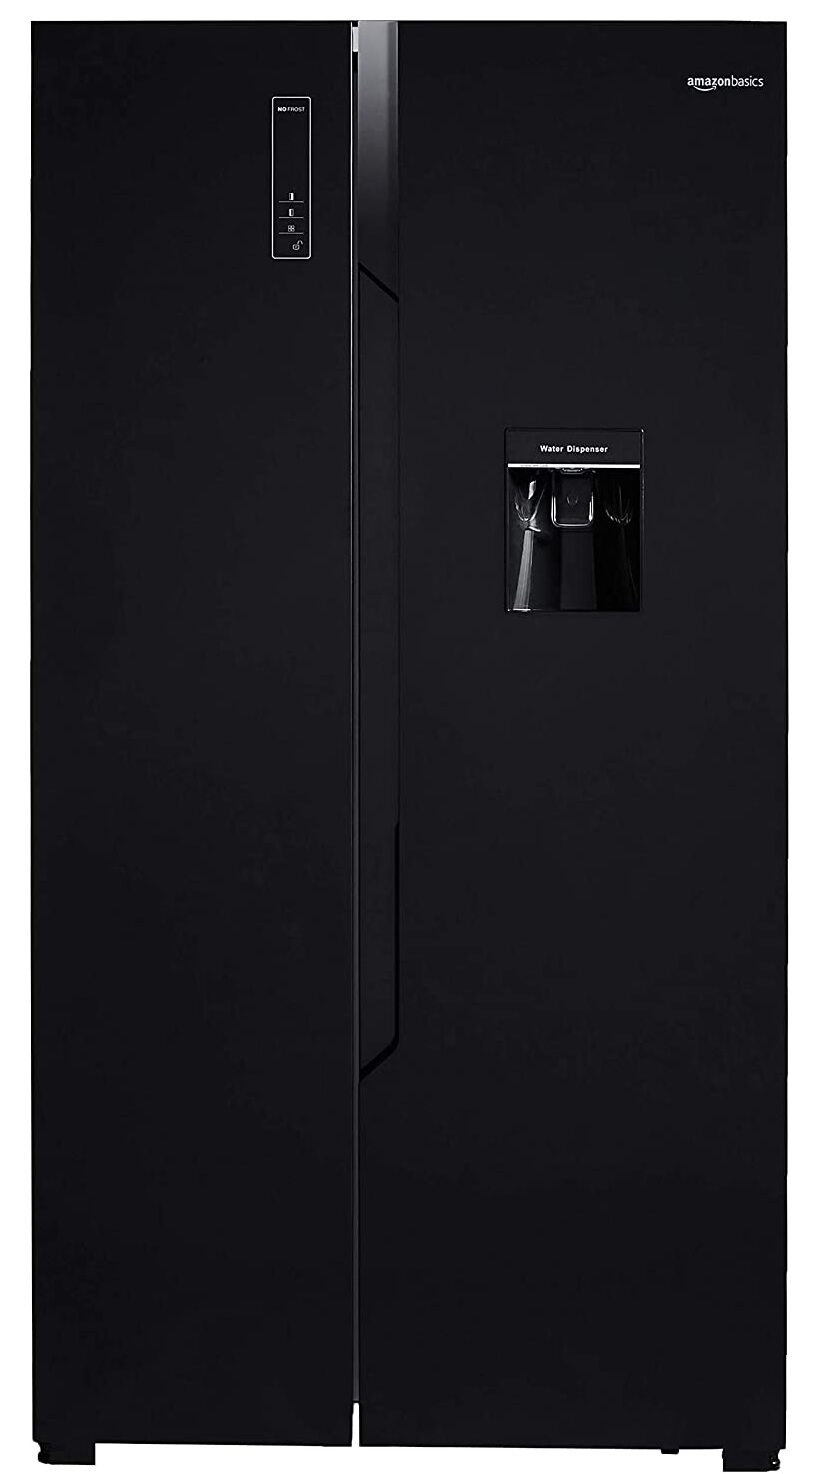 Amazon fridge 1